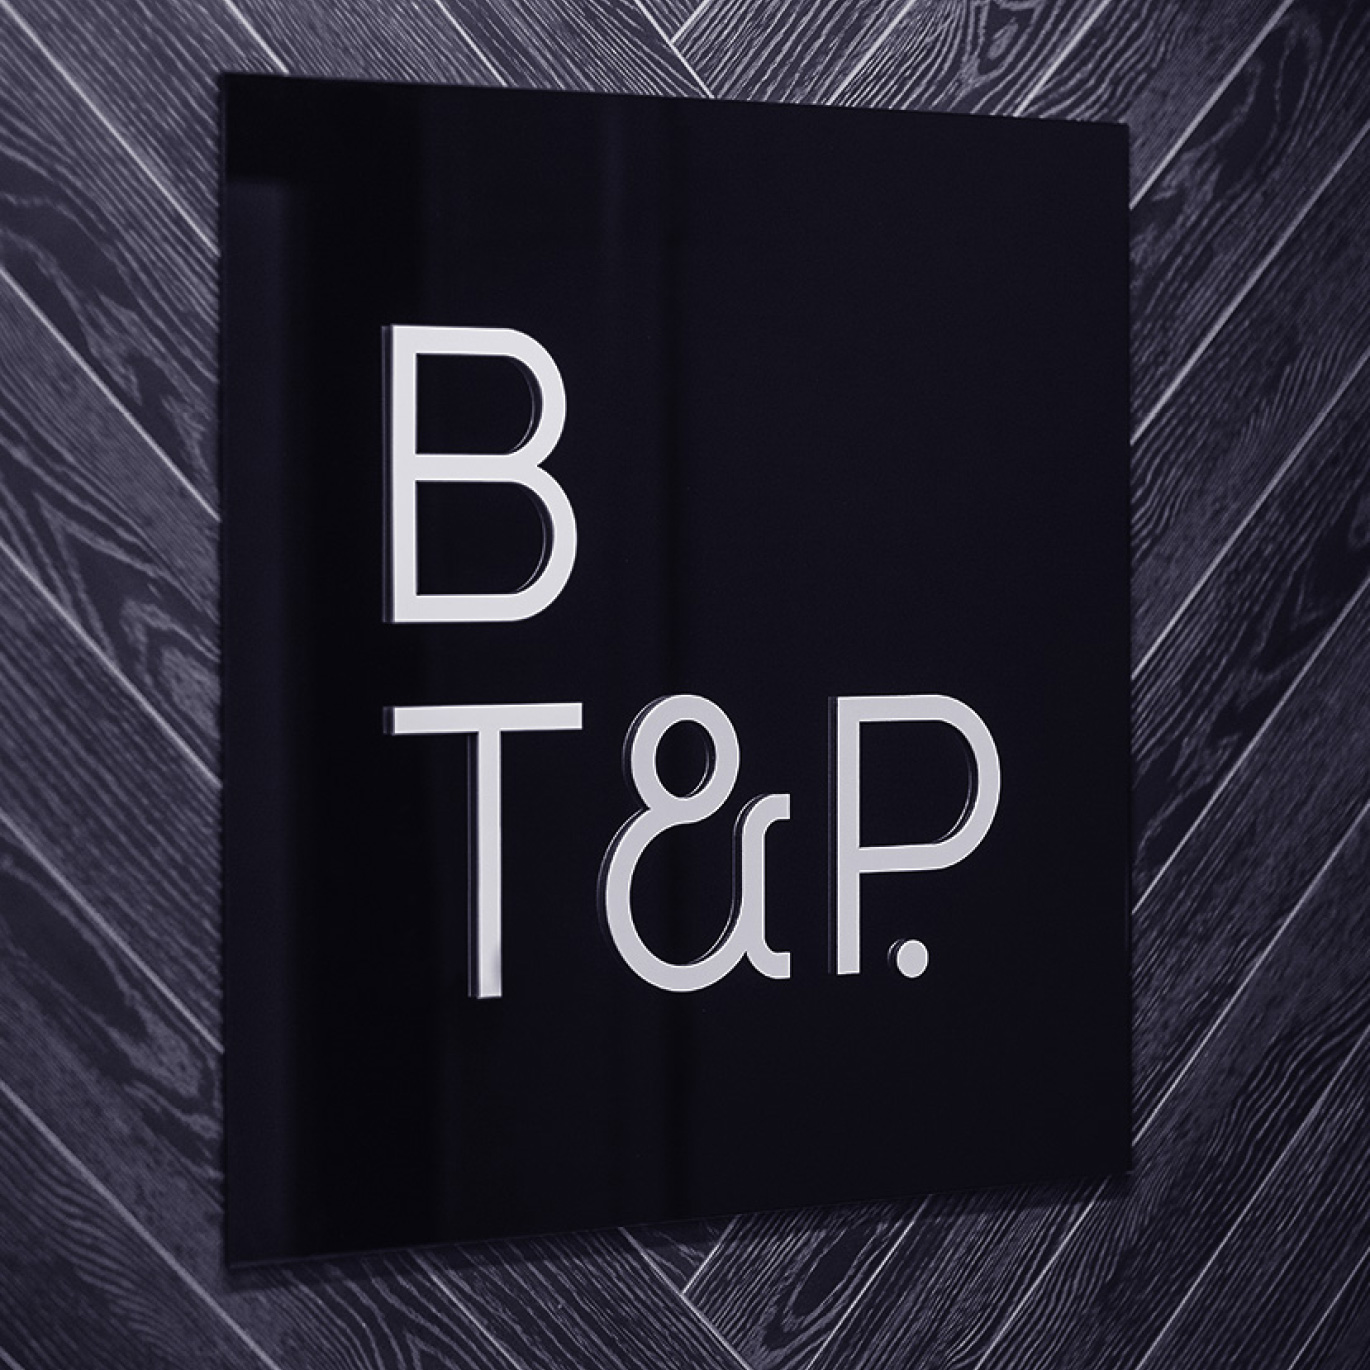 BT&P photography., Branding, brand identity, logo design, web design and photography. Sydney, Surry Hills